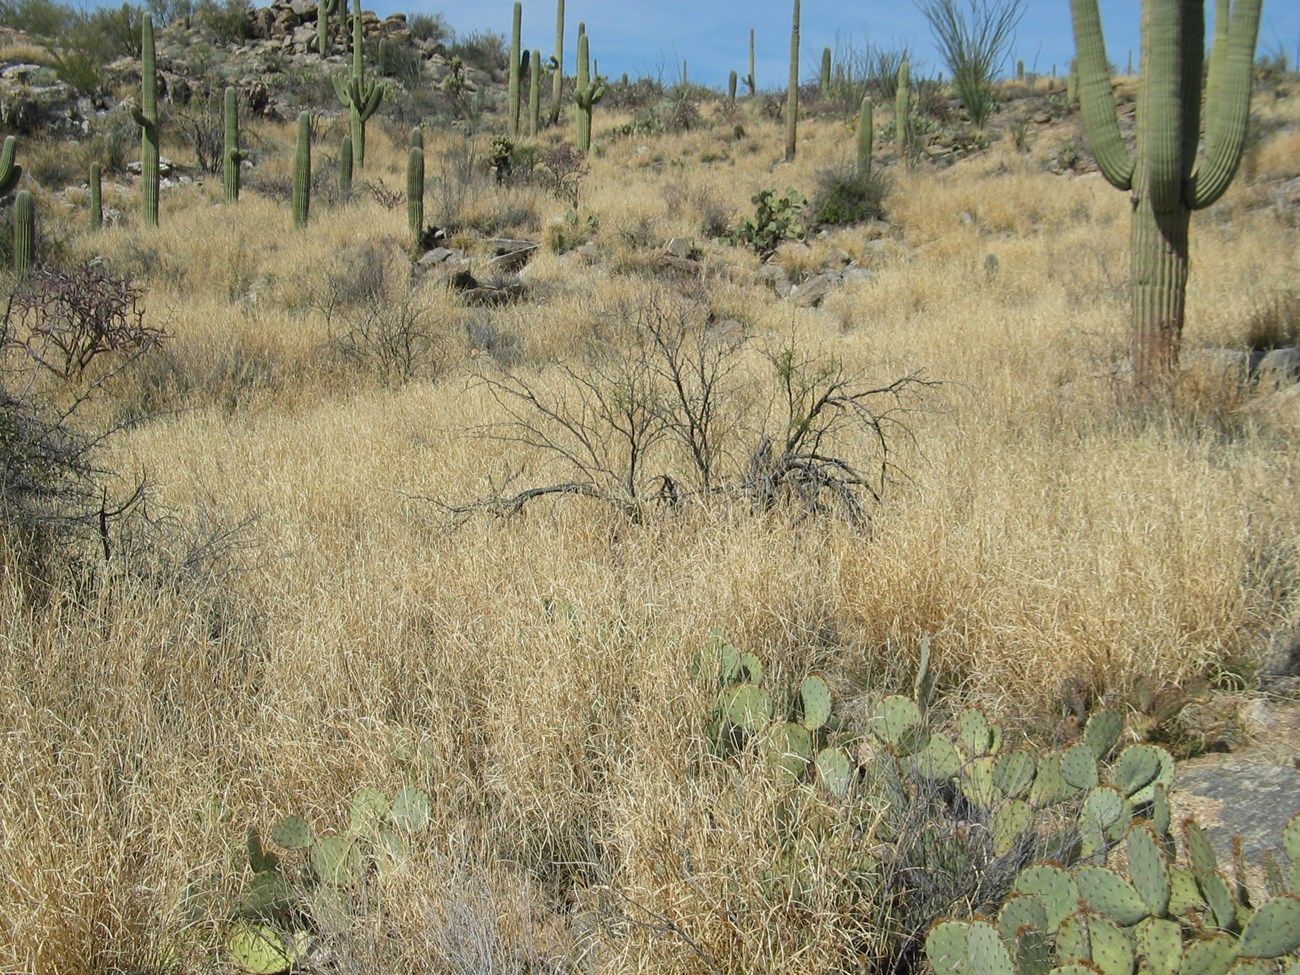 Dense stand of the invasive grass buffelgrass choking out native vegetation in Saguaro National Park, Arizona.